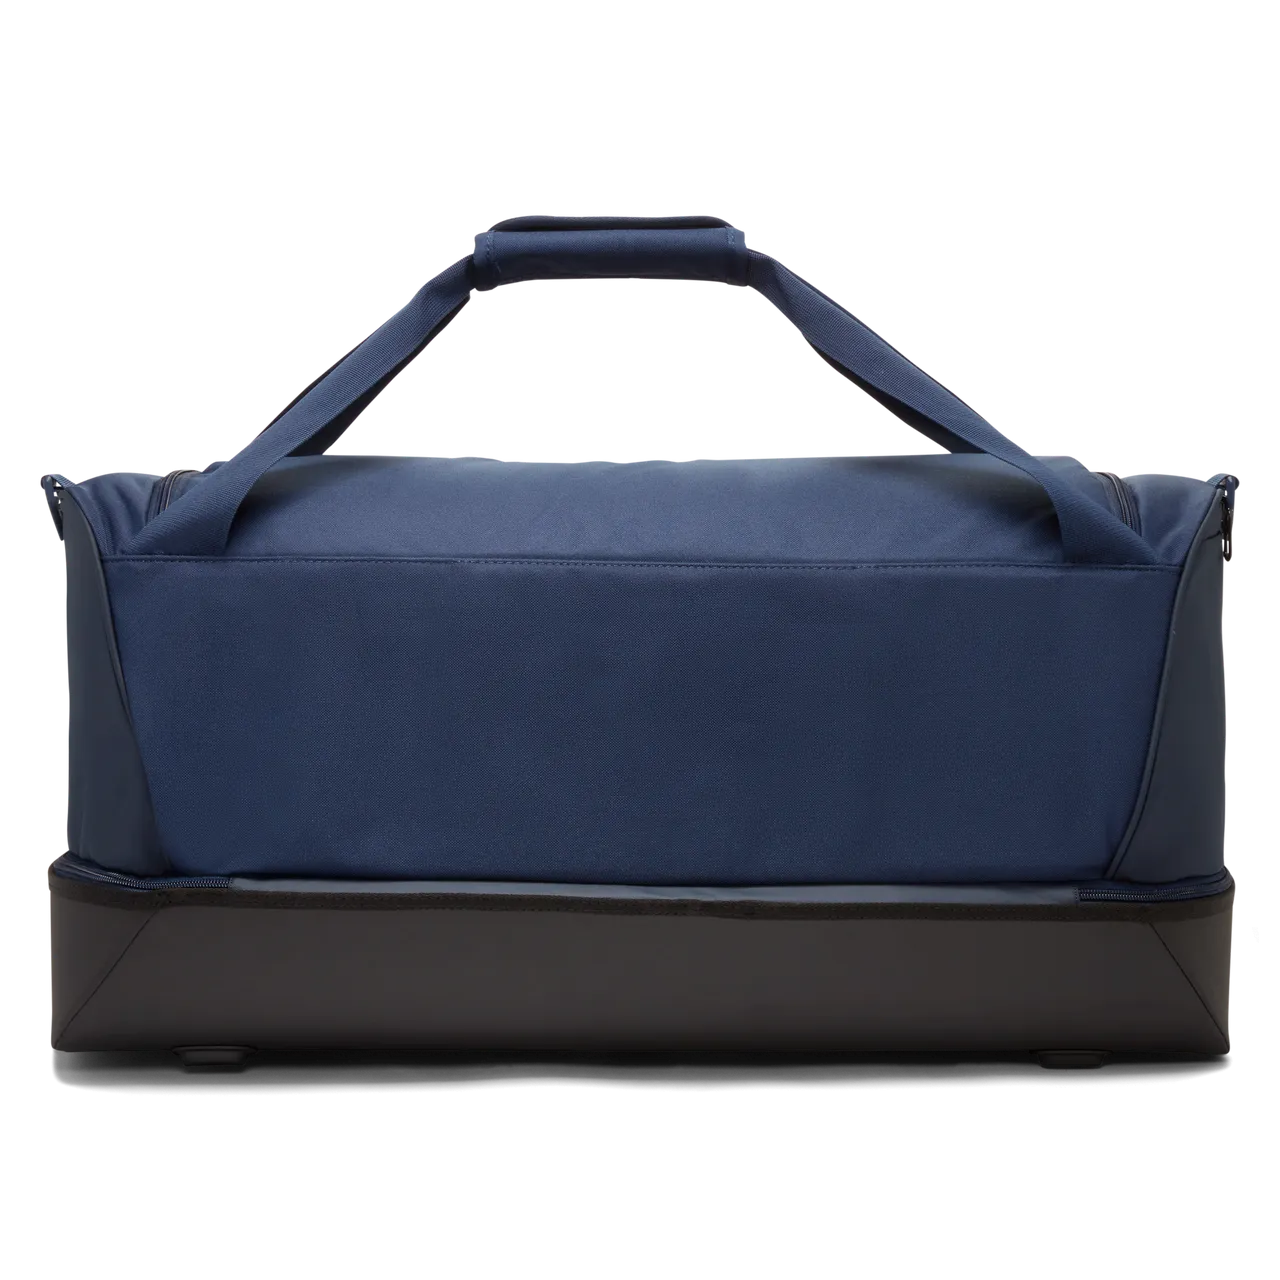 Nike Academy Team Football Hardcase Duffel Bag (Large, 59L) - Blue - Polyester